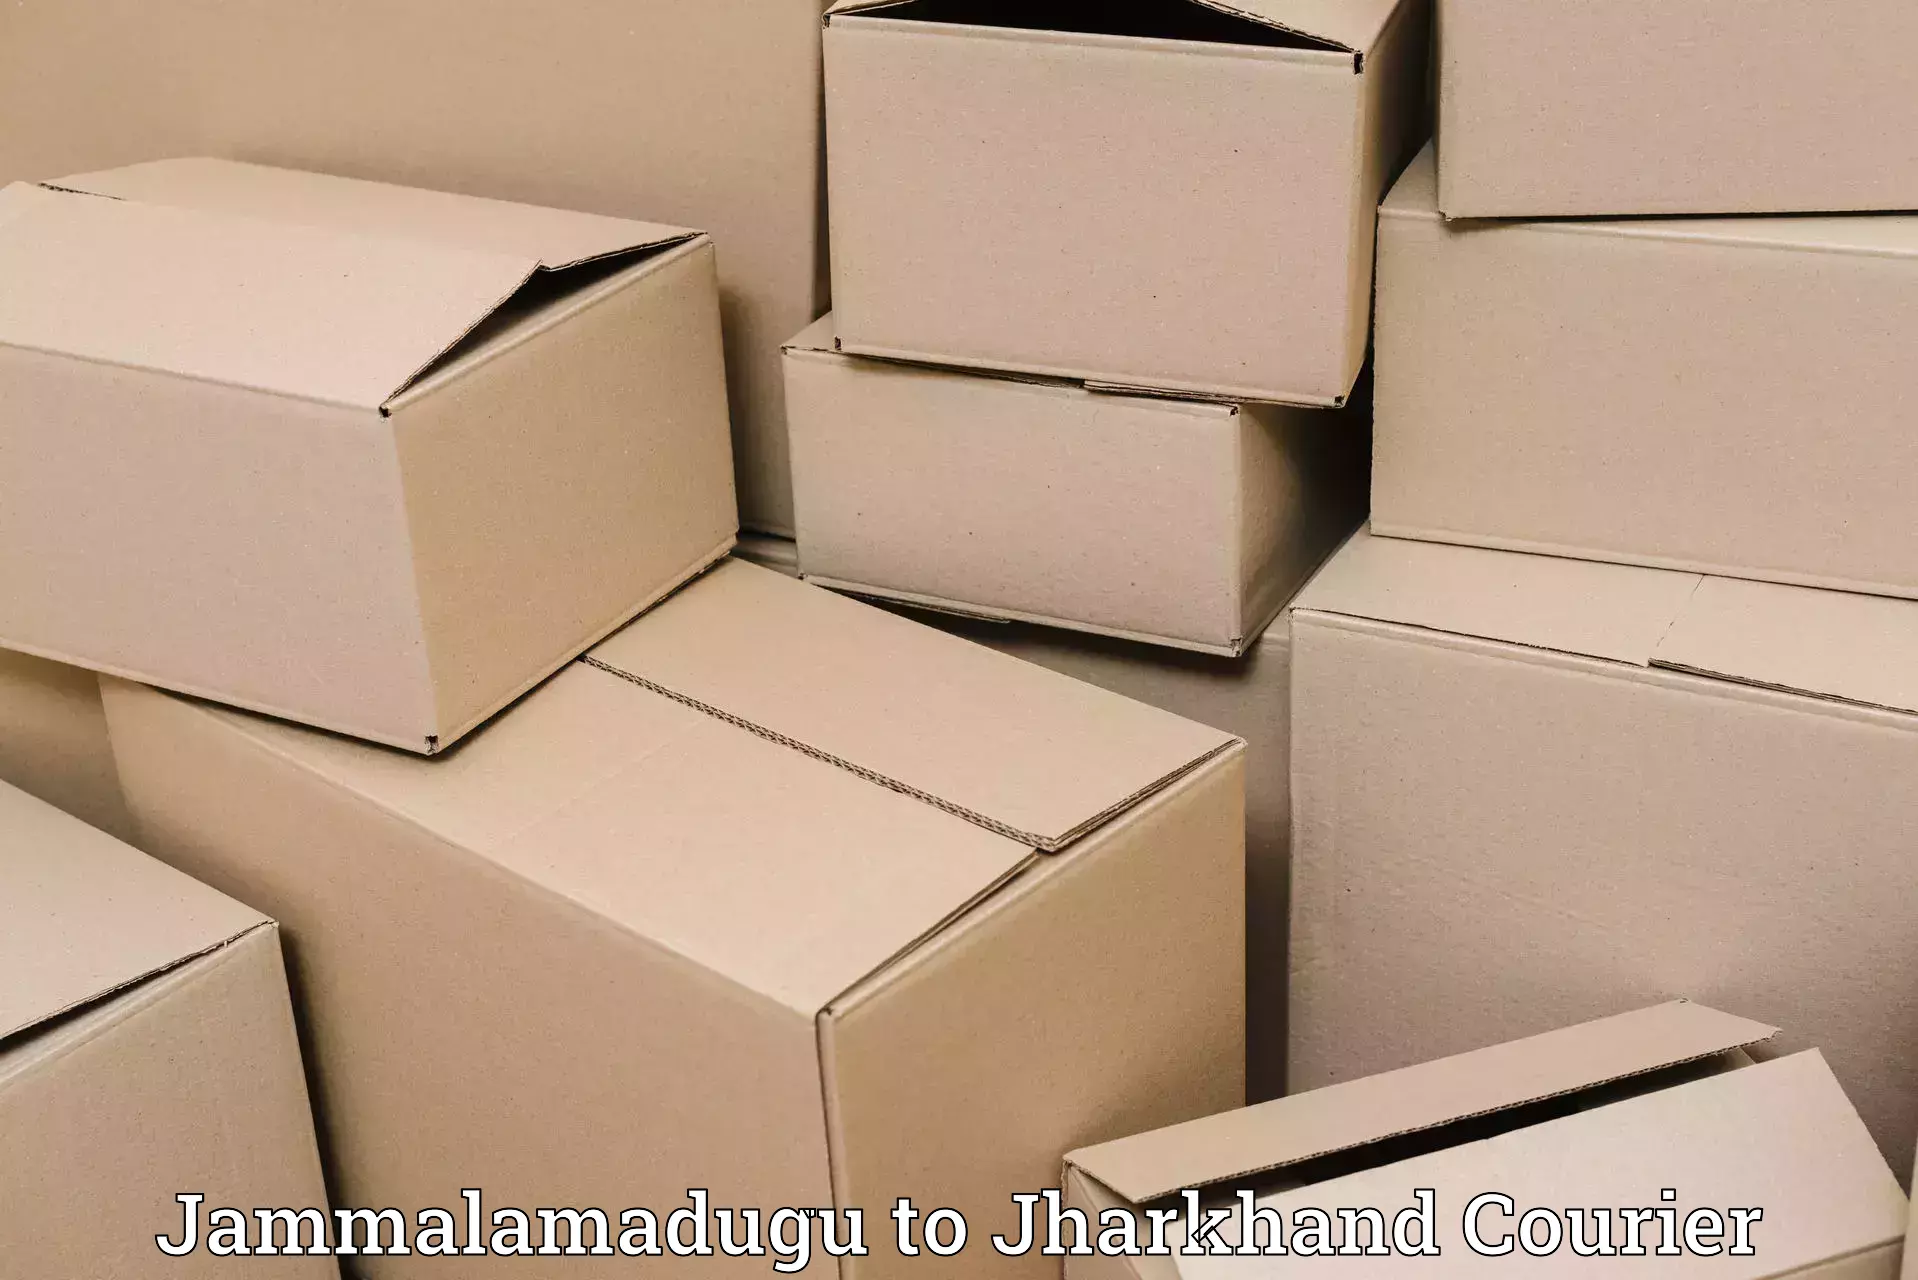 Supply chain efficiency in Jammalamadugu to Jharkhand